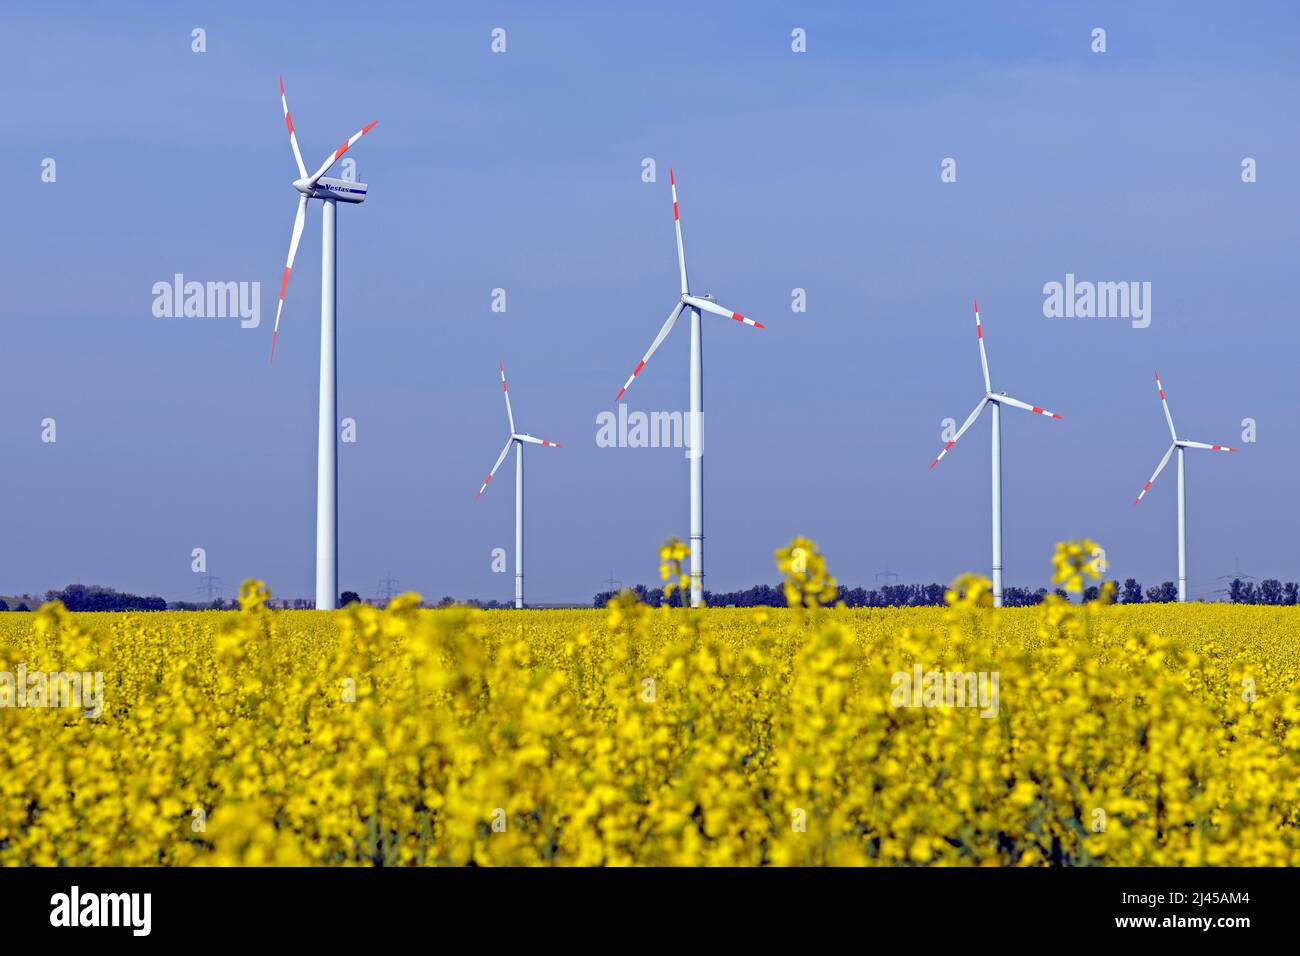 Windkraftanlagen a Rapsfeld (Brassica napus) erneuerbare Energie, Erneuerbare Energien, Steigende Energiepreise, Rapsfeld, Foto Stock